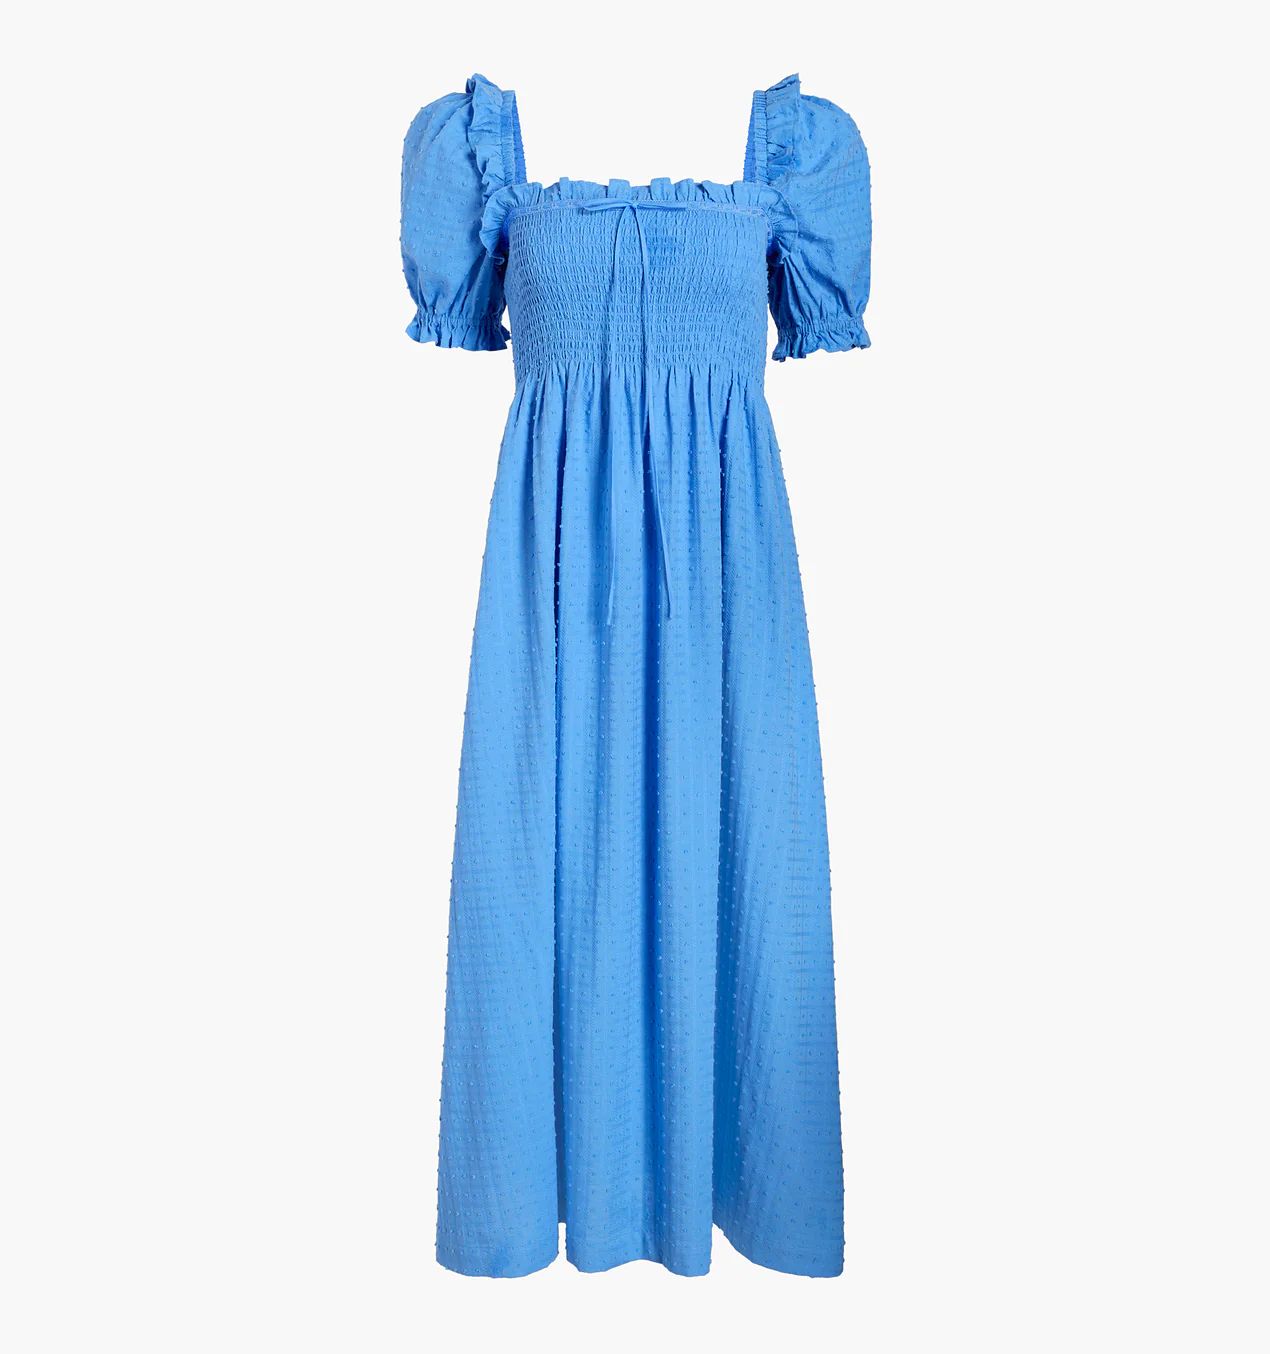 The Scarlett Midi Nap Dress - Hydrangea Blue Textured Clip Dot | Hill House Home